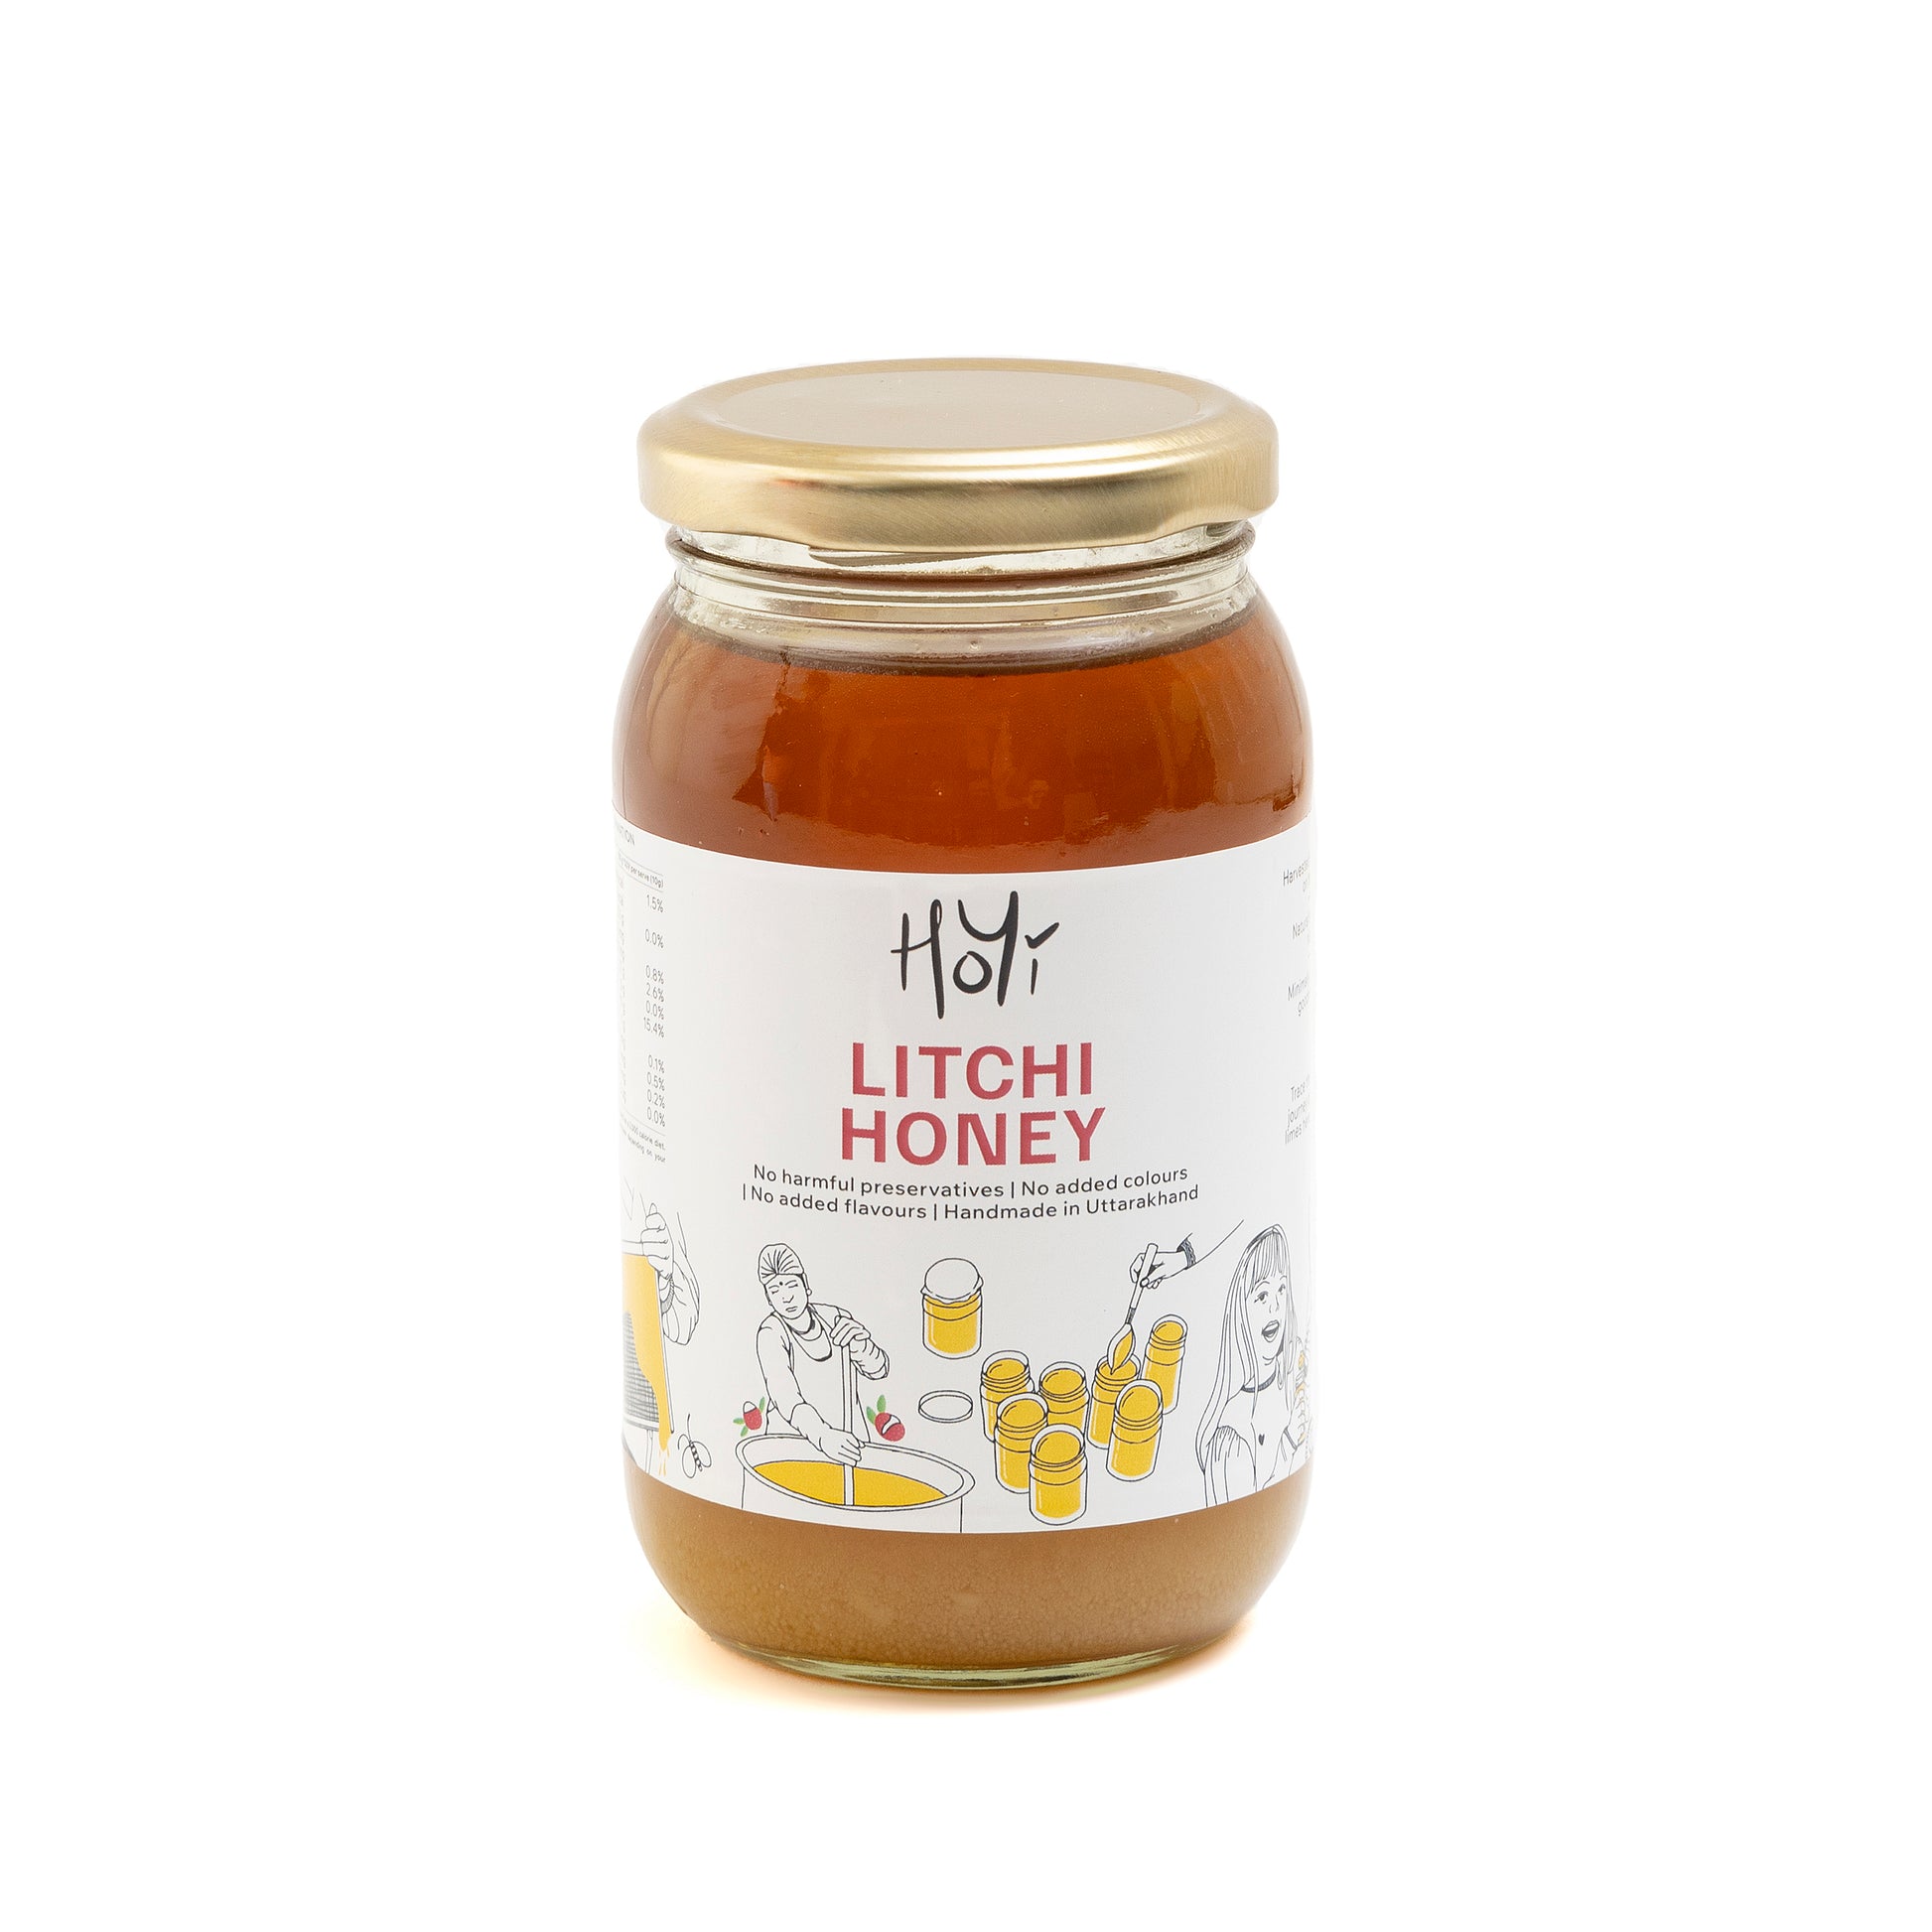 HoYi Litchi Honey 500 gm Handmade and Organic (Front)